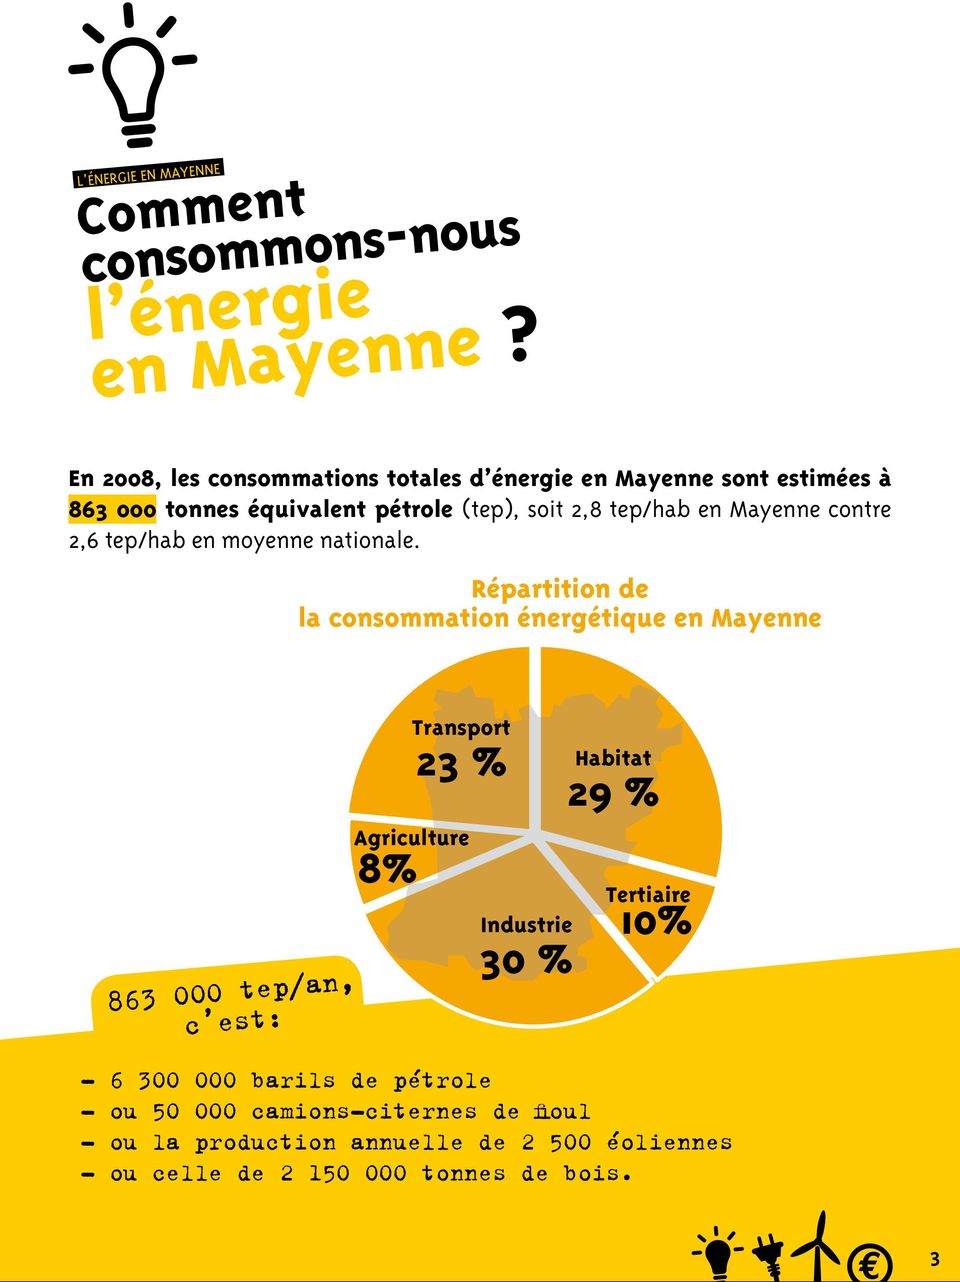 Mayenne contre 2,6 tep/hab en moyenne nationale.